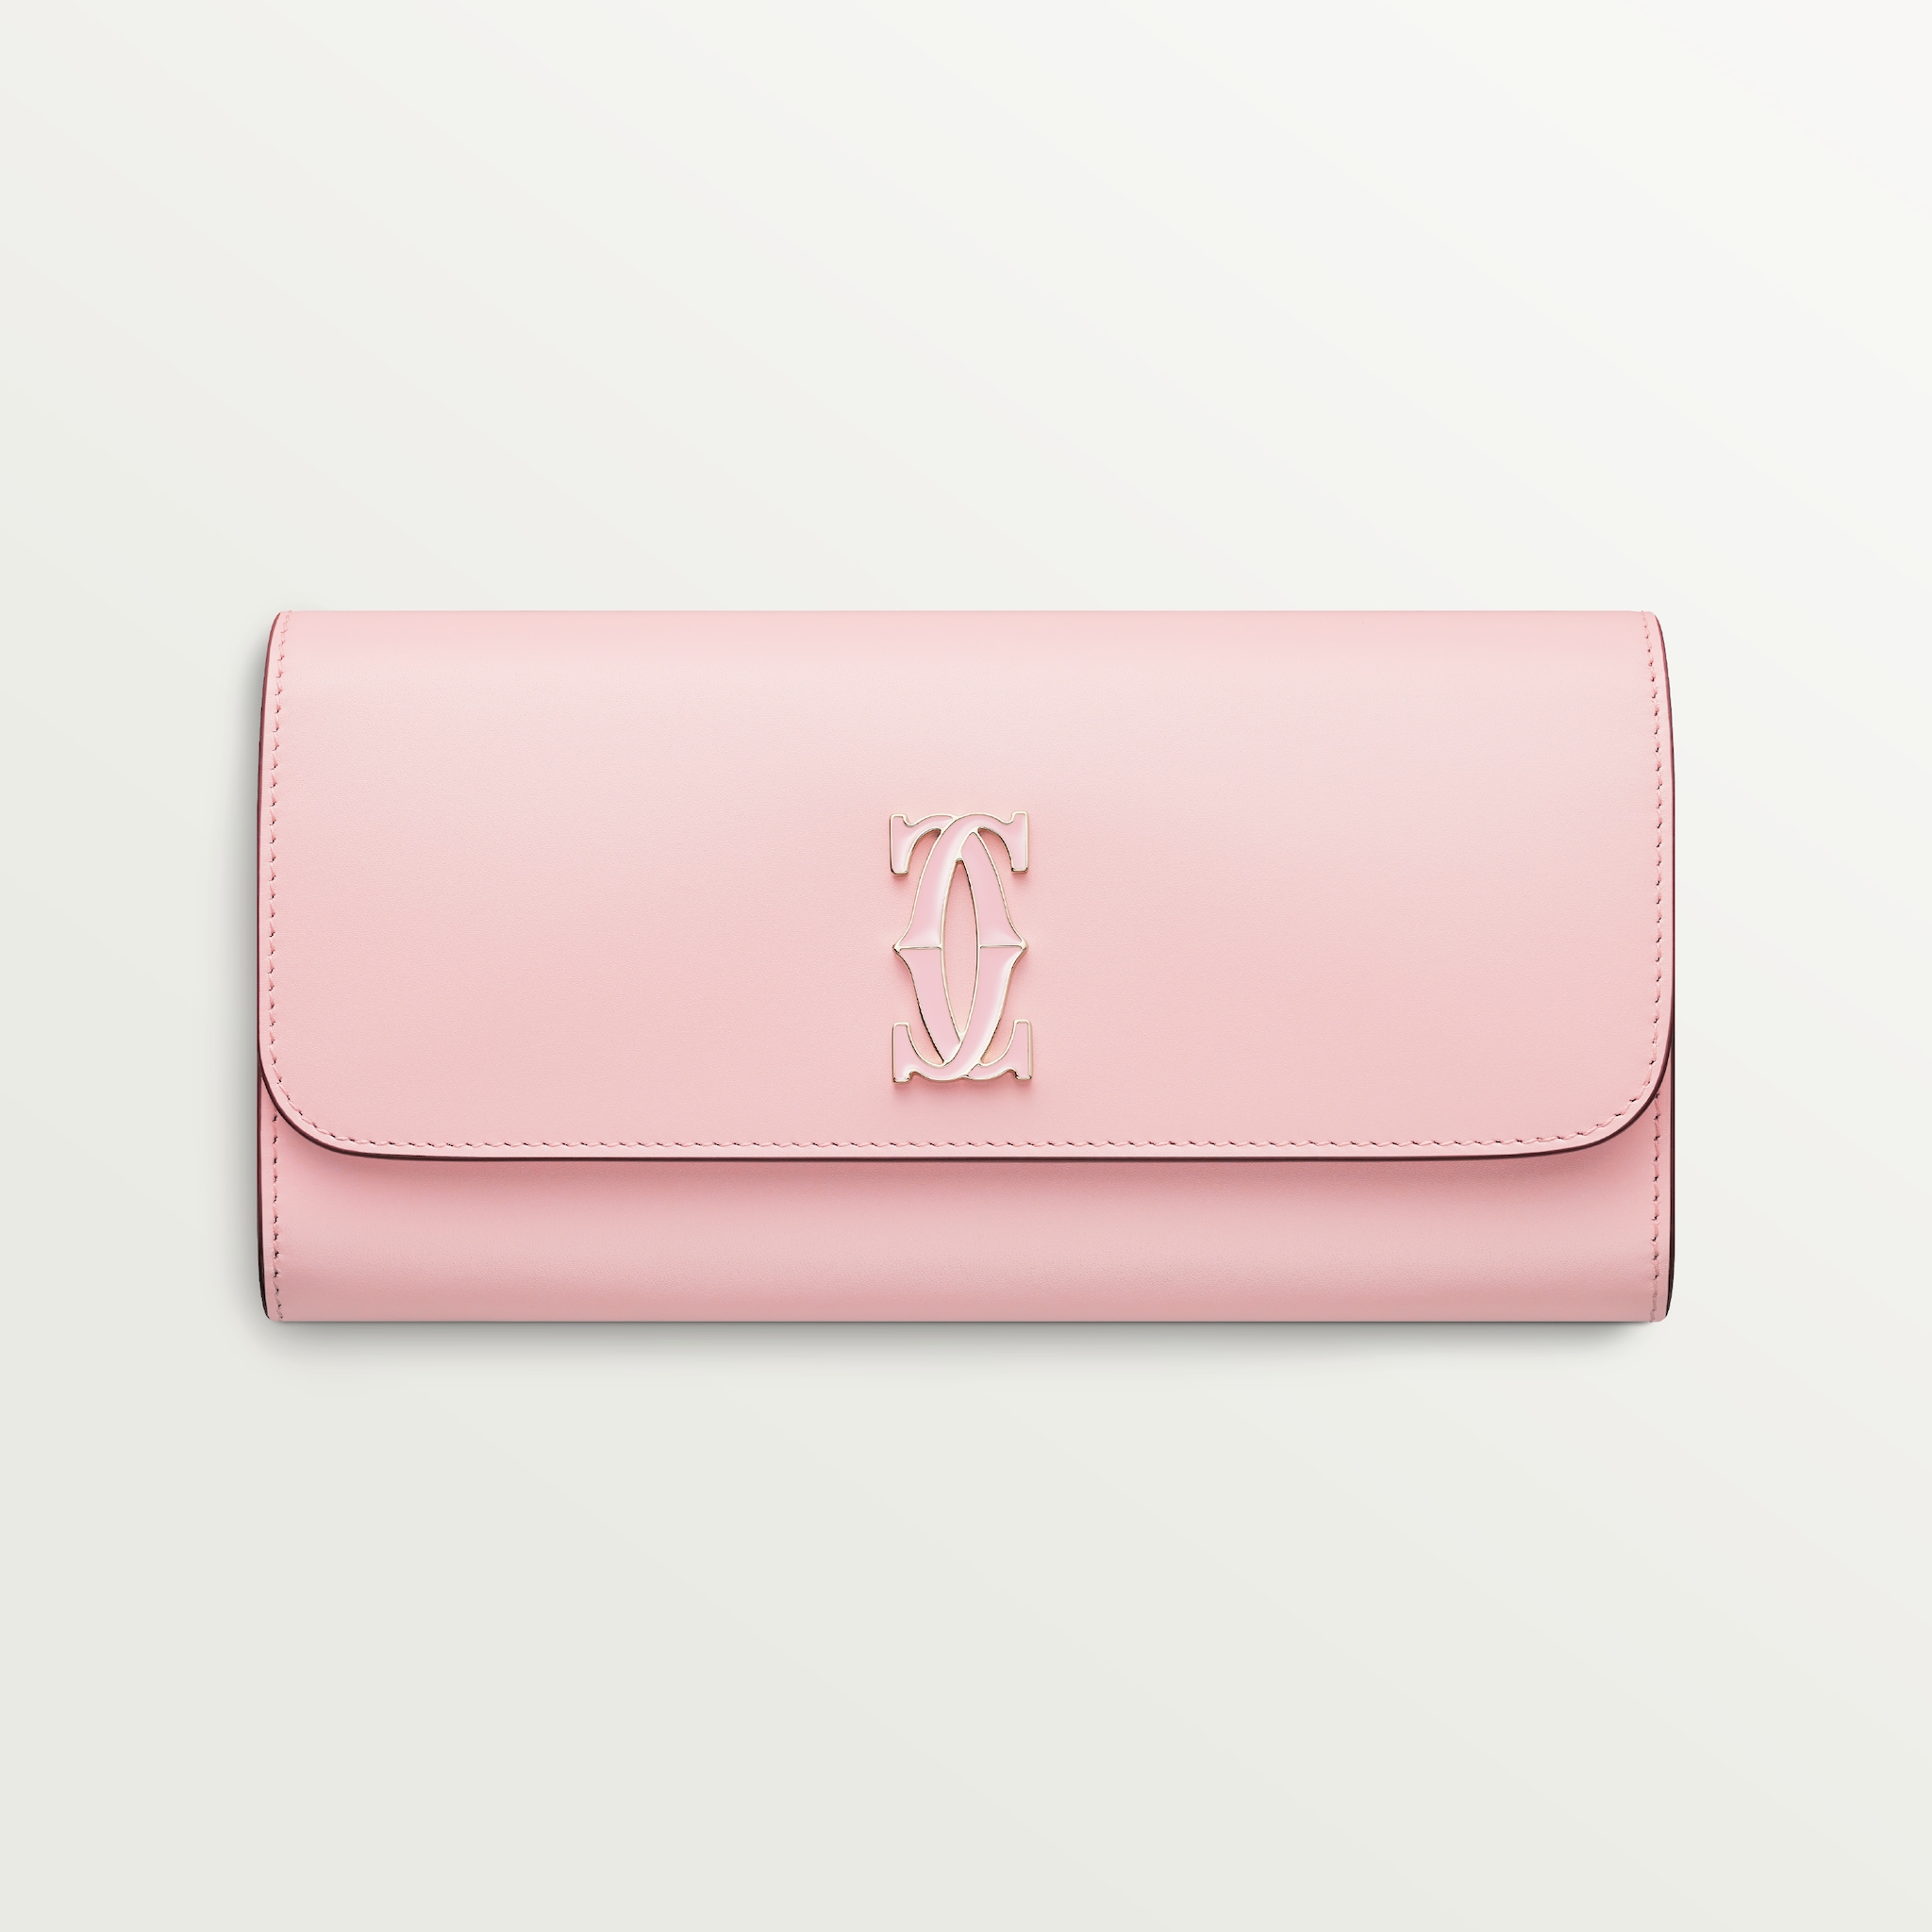 International wallet with flap, C de CartierPale pink calfskin, golden and pale pink enamel finish